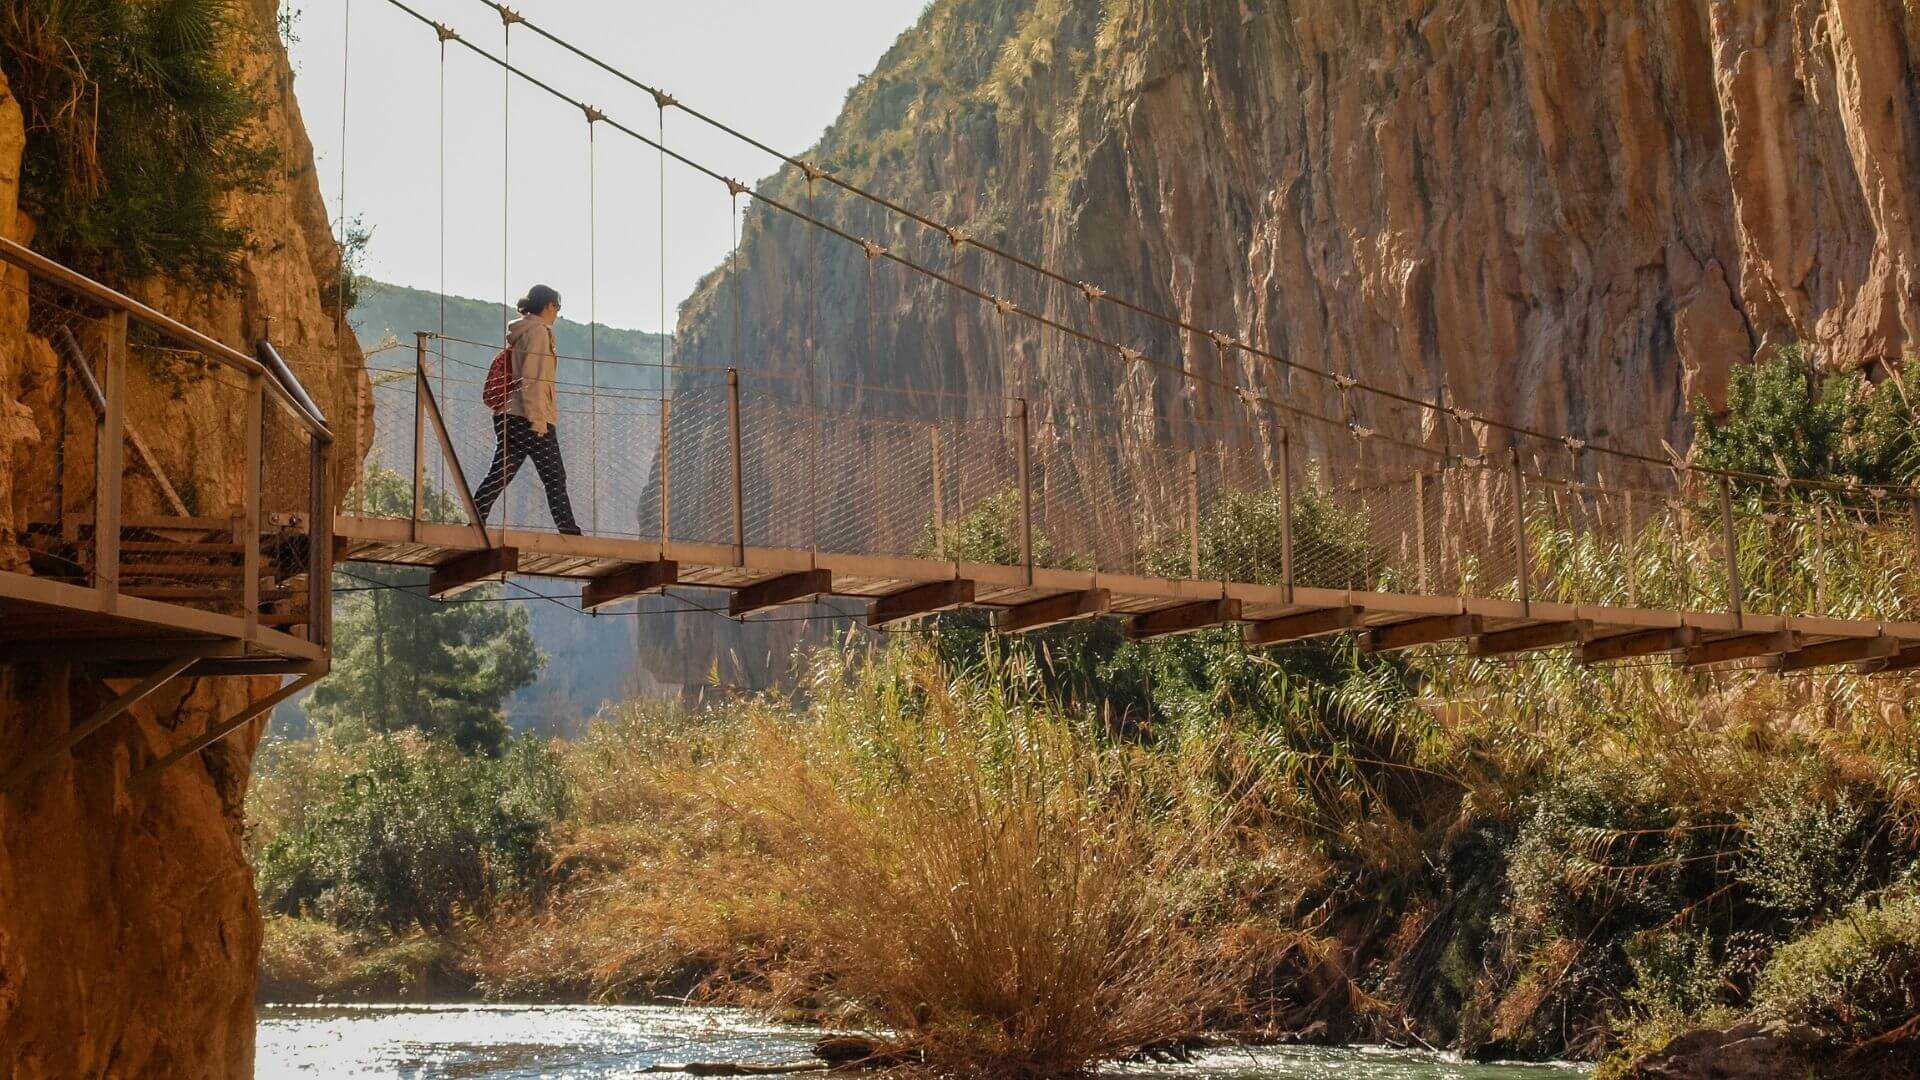 Supera tus límites en la ruta de los puentes colgantes de Chulilla